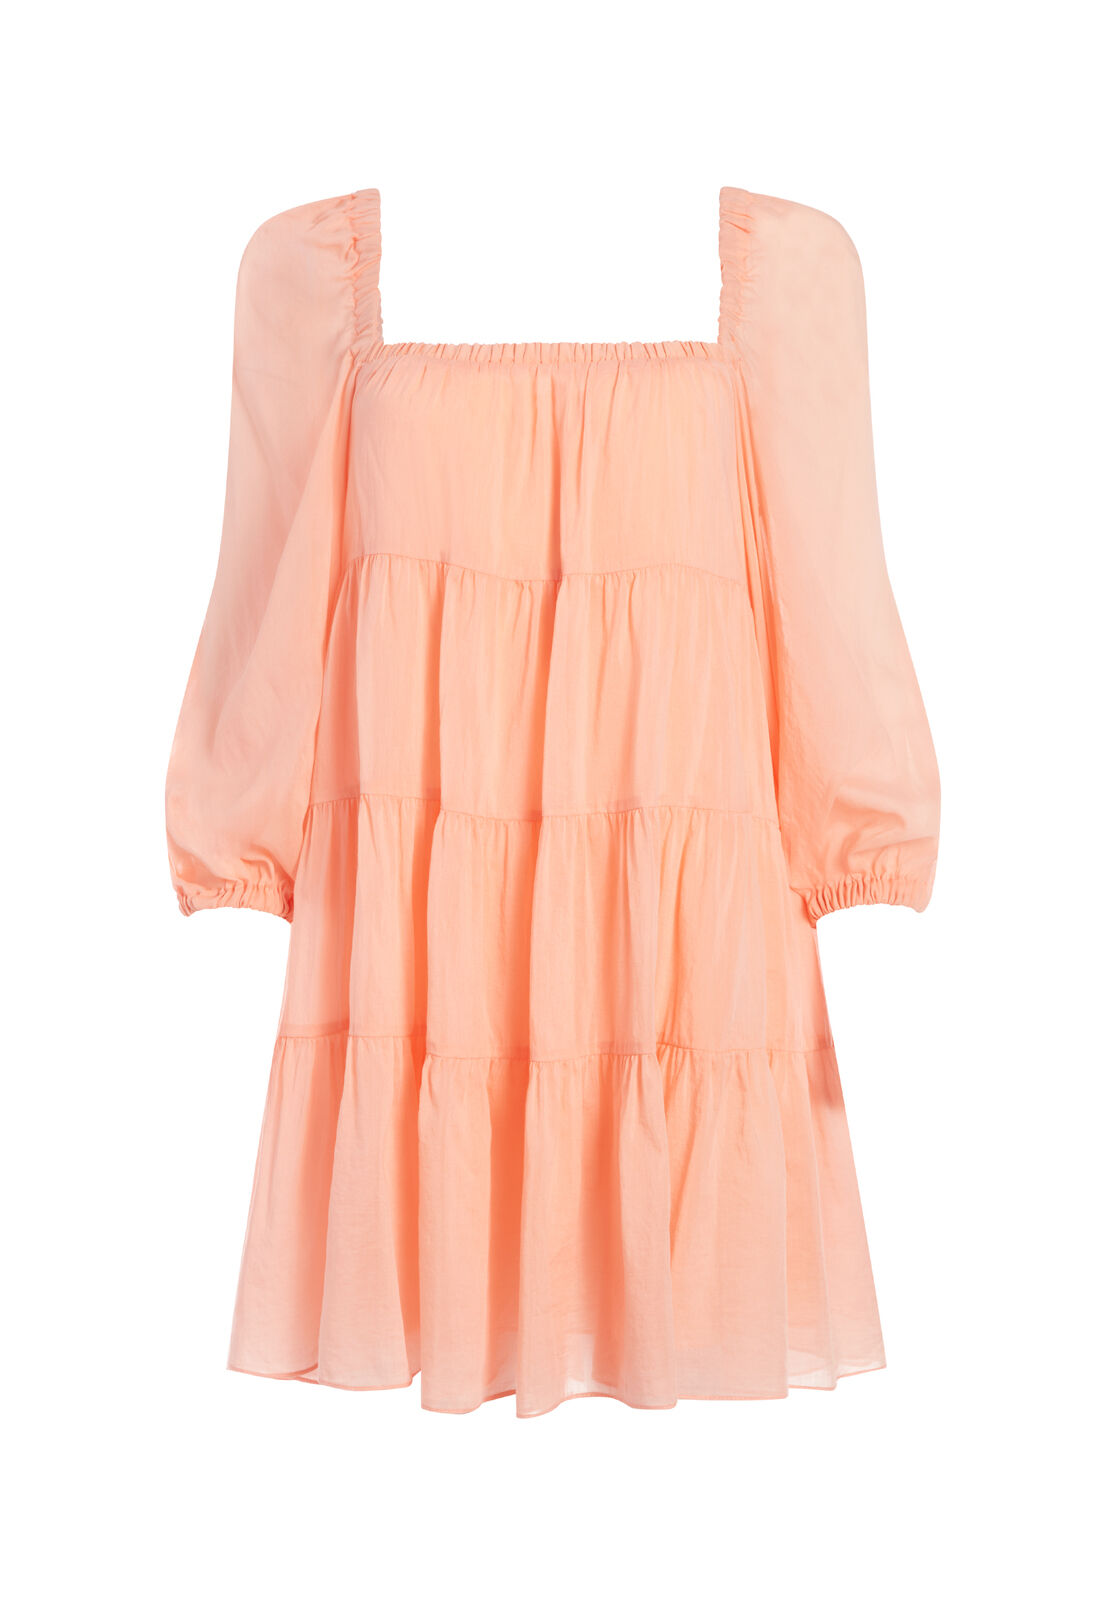 peach tunic dress